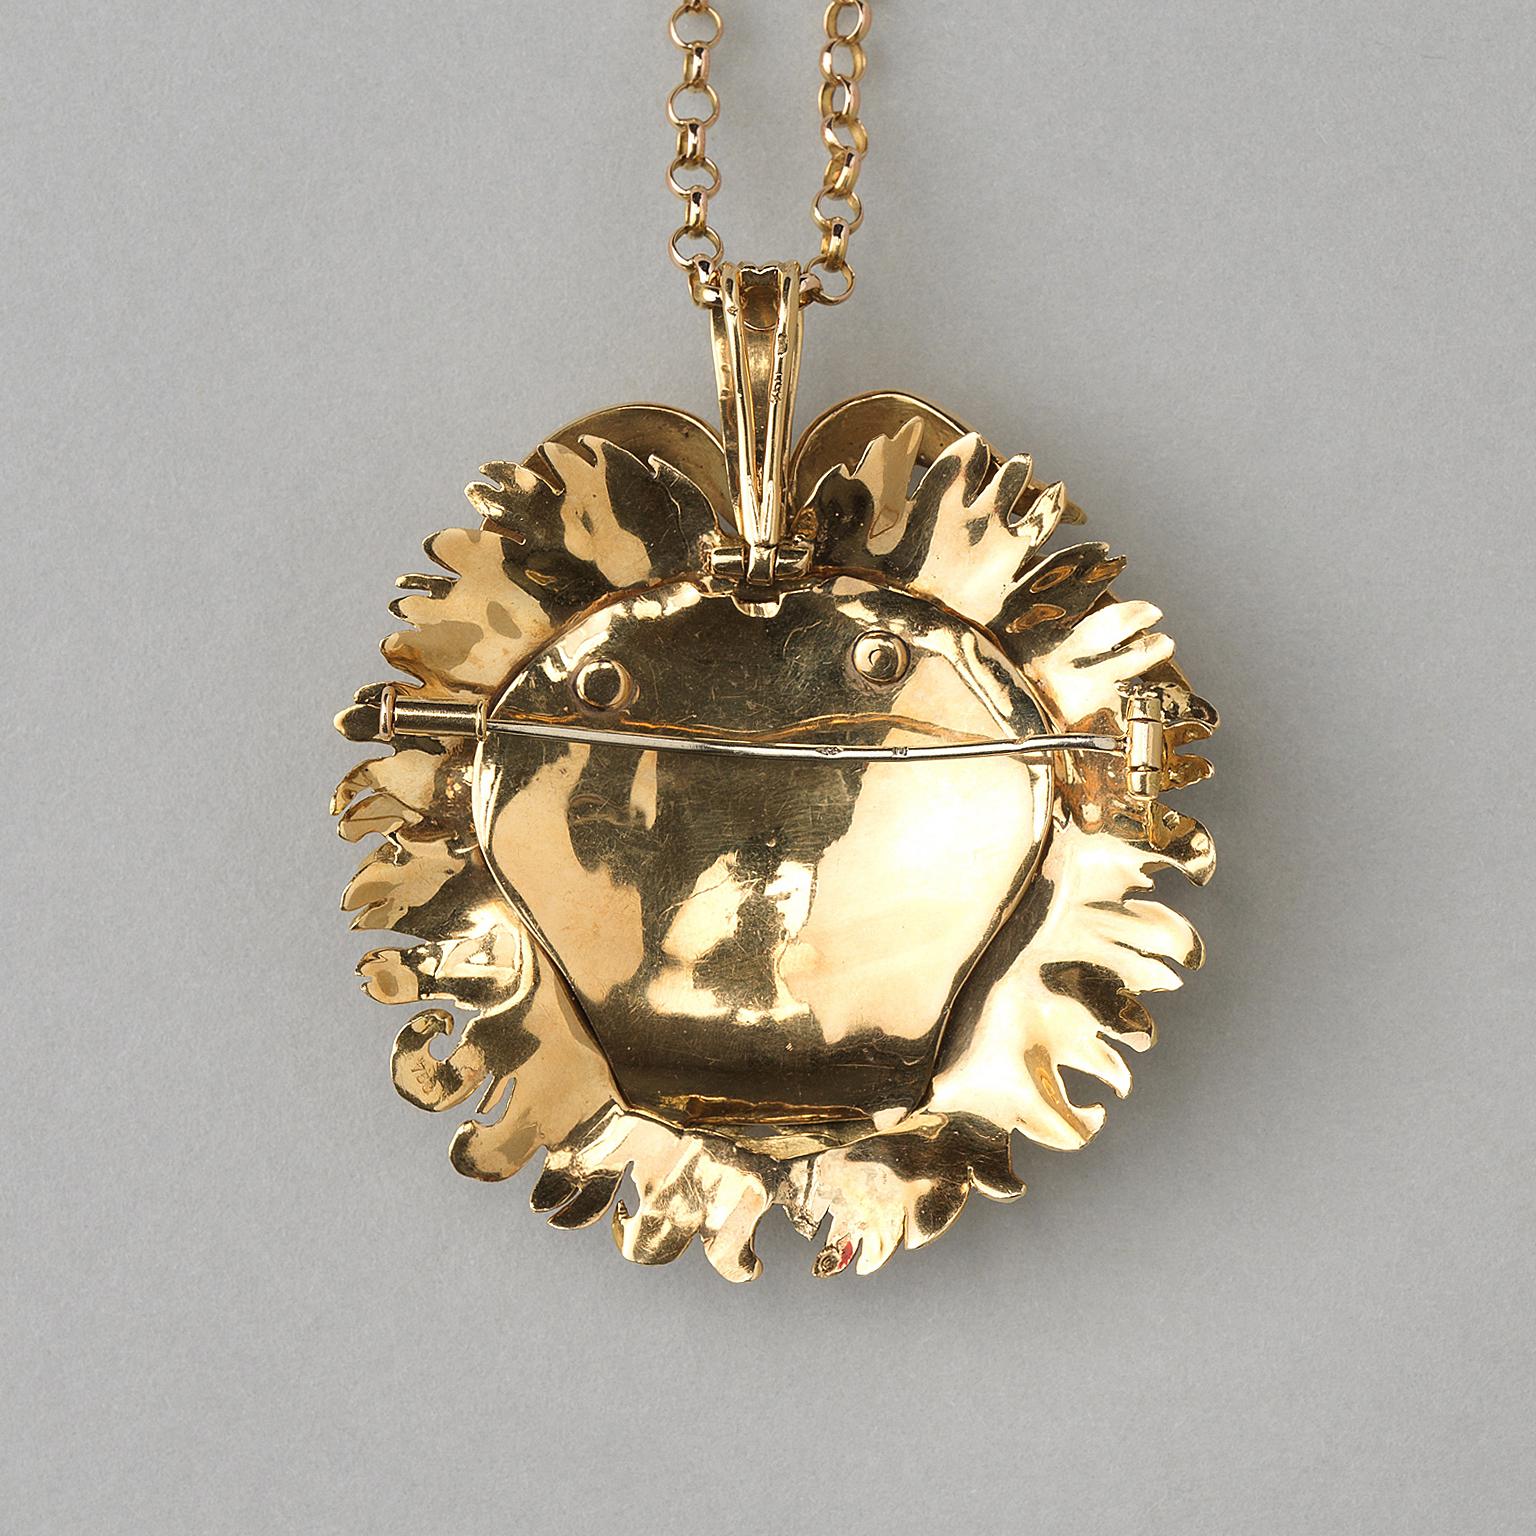 Brilliant Cut Large 18 Carat Gold Leo Pendant with Diamonds